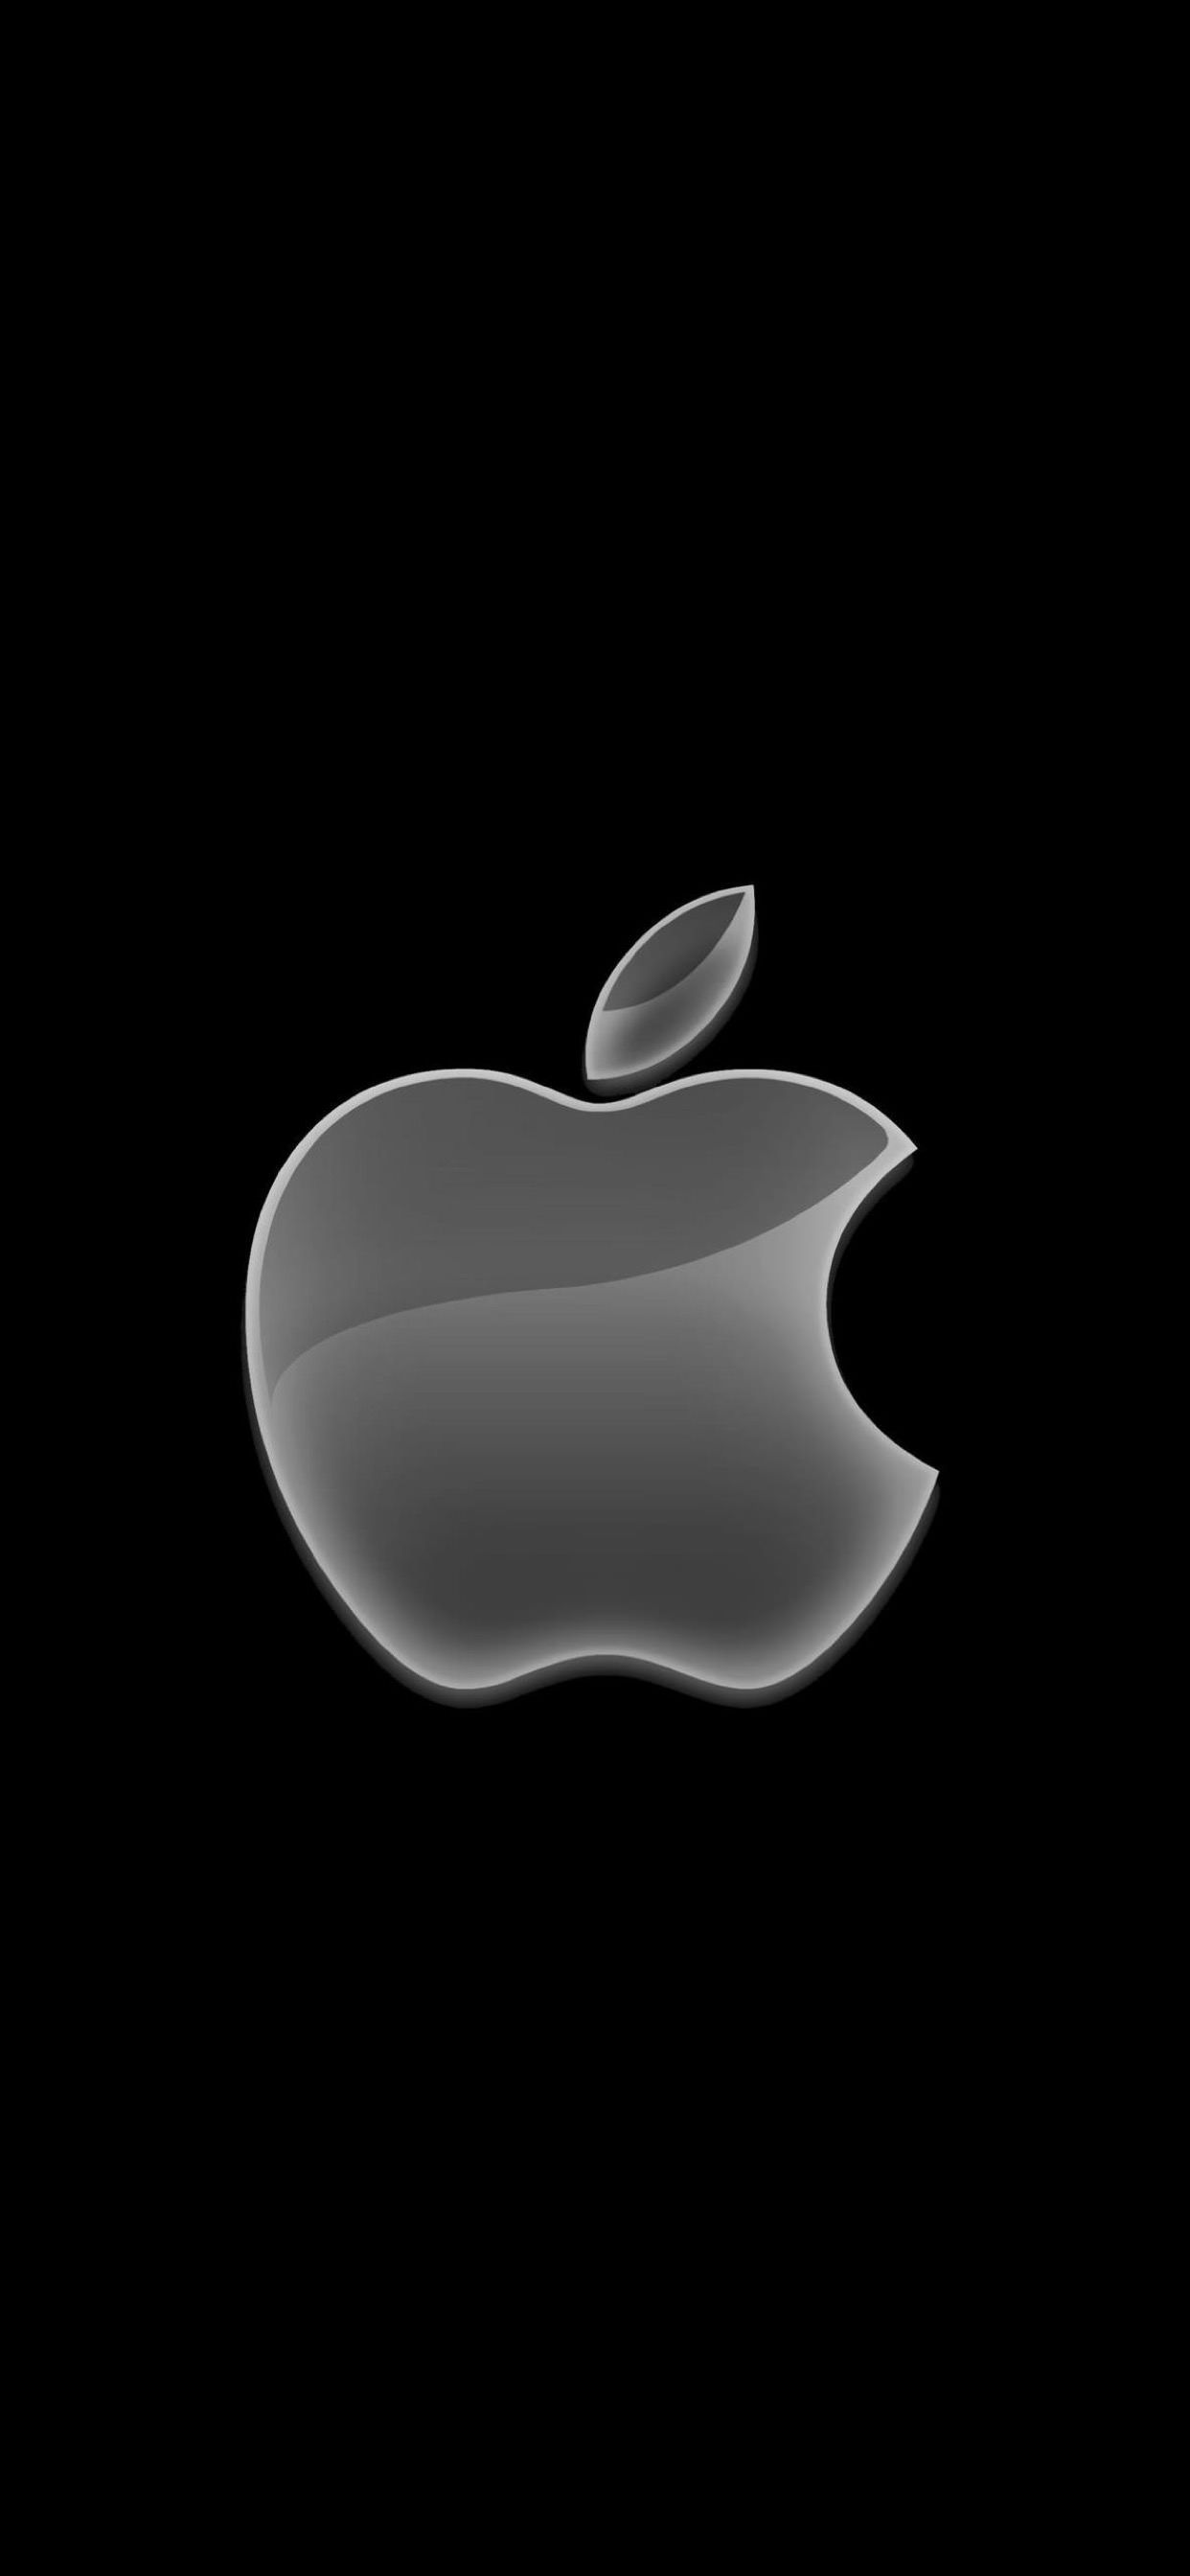 Download iPhone Xs Max Wallpaper Apple Logo. Cikimm.com. Apple logo wallpaper iphone, Black apple wallpaper, Apple wallpaper iphone